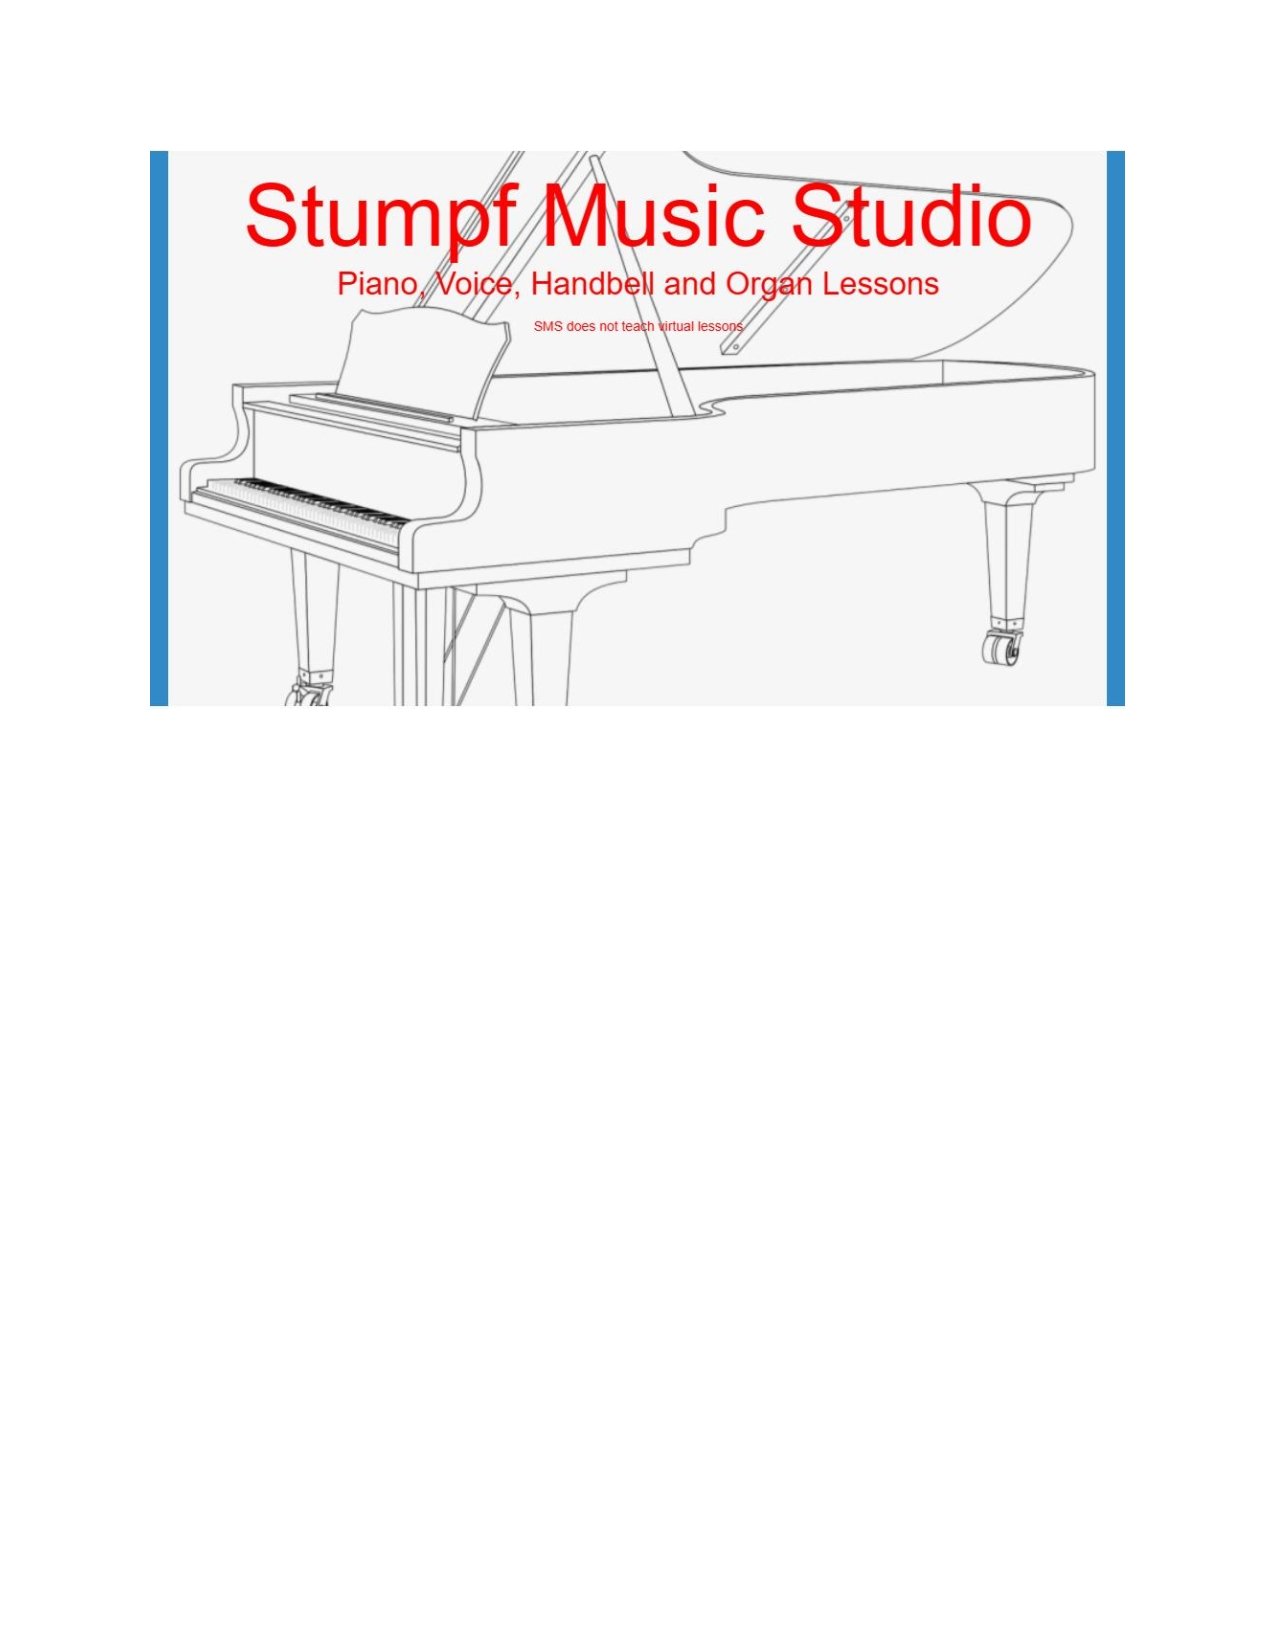 Stumpf Music Studio logo